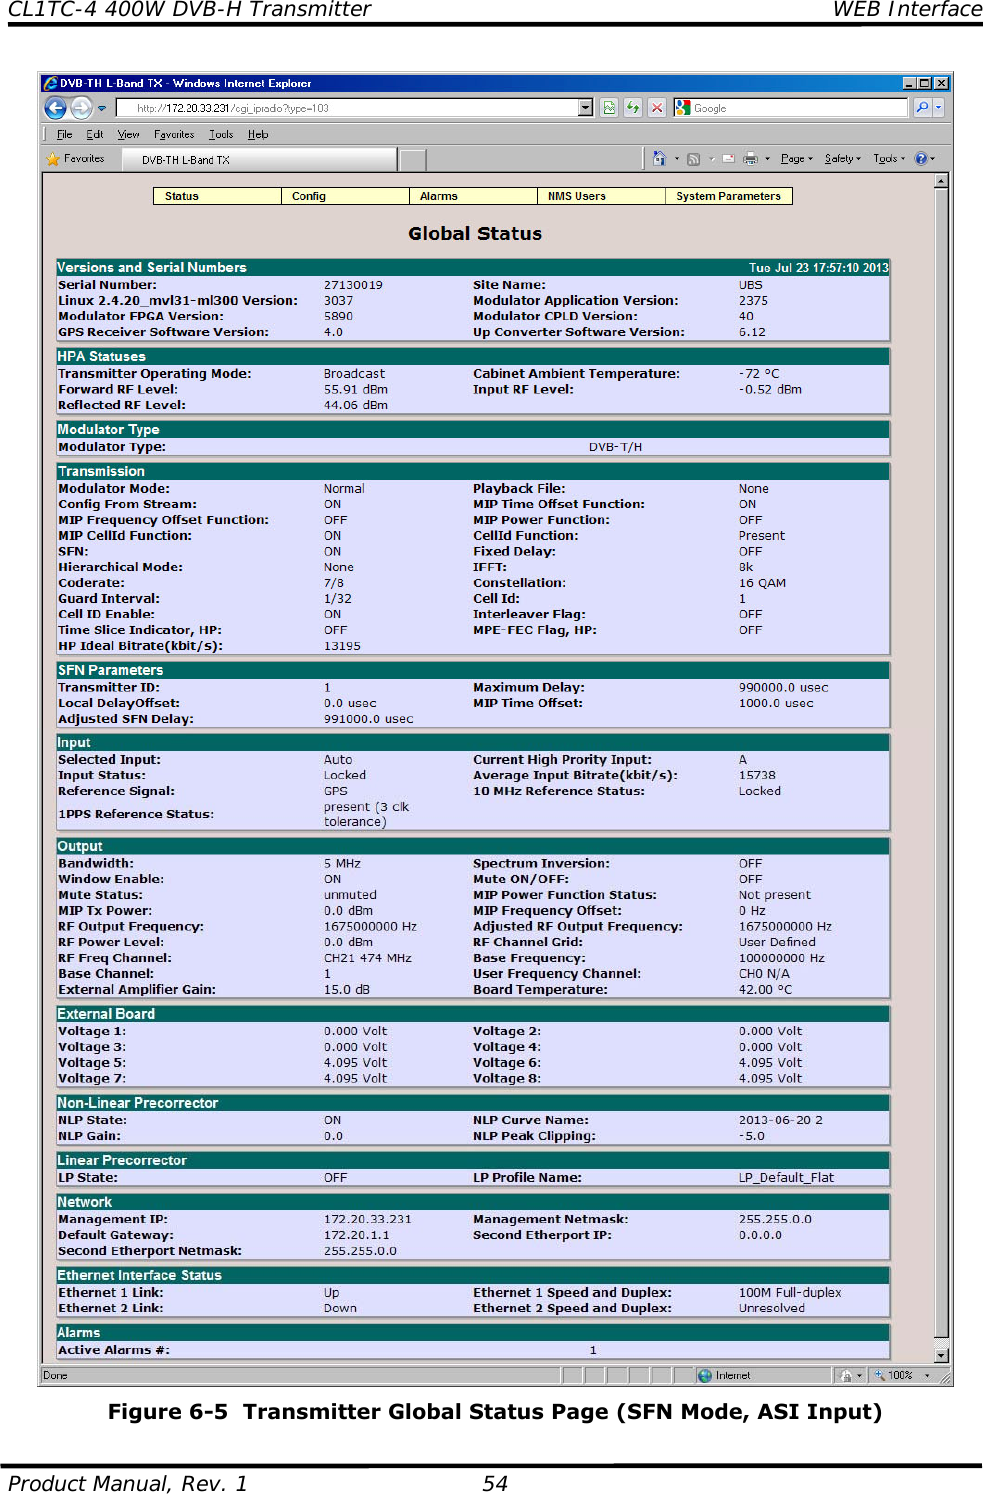 CL1TC-4 400W DVB-H Transmitter   WEB Interface  Product Manual, Rev. 1  54  Figure 6-5  Transmitter Global Status Page (SFN Mode, ASI Input) 